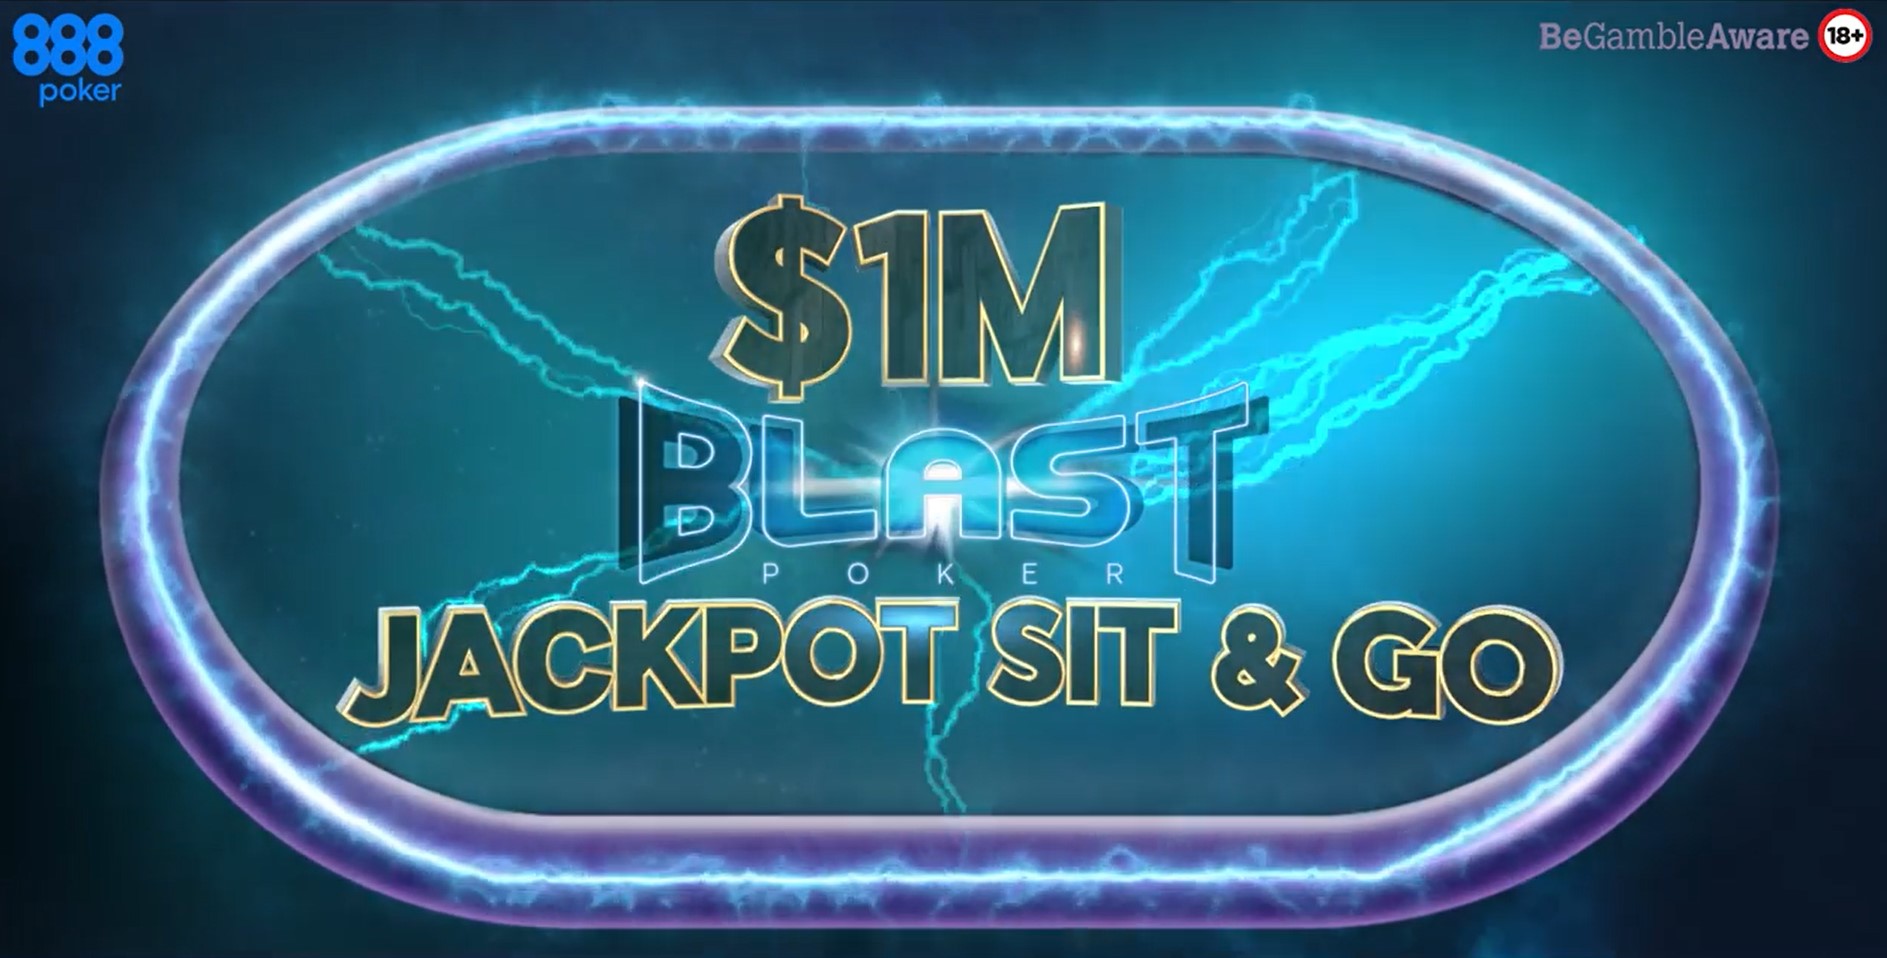 BLAST freerolls granting tickets to the $1,000,000 BLAST prize pool